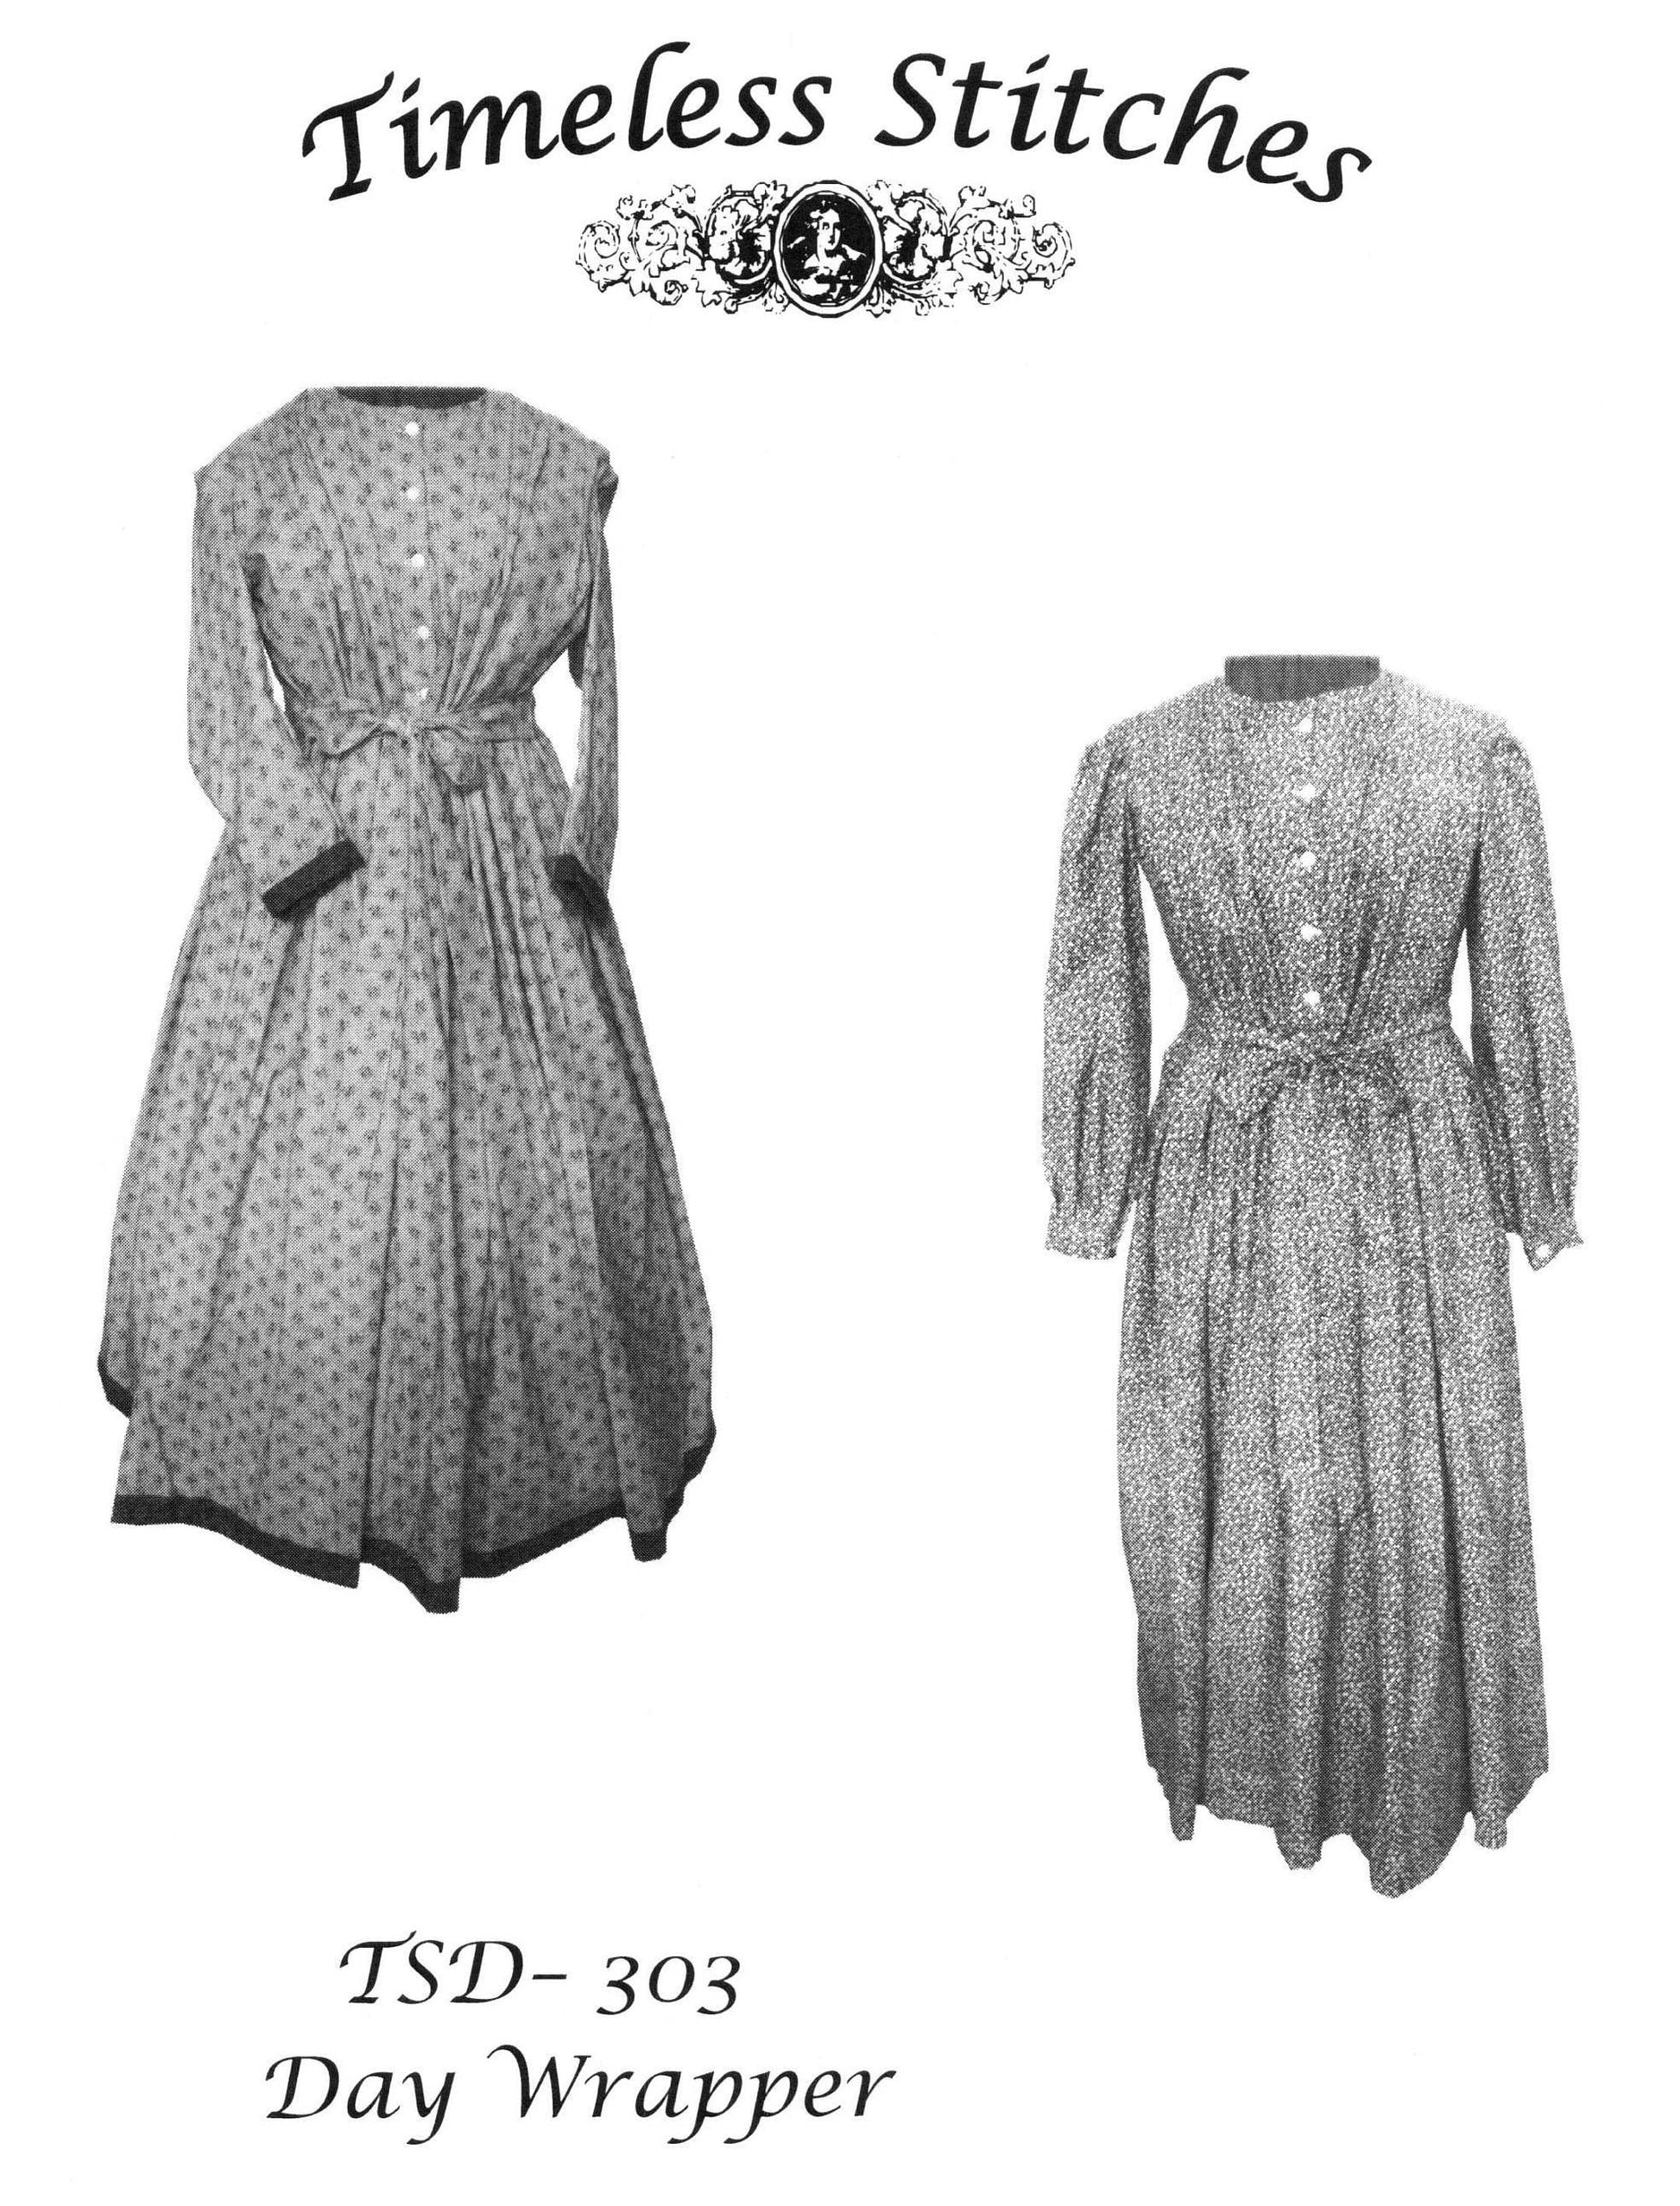 Day Wrapper Dress /Mid- 19th Century 1840- early 1870/ Civil War Era Dress Pattern/ Timeless Stitches Sewing Pattern TSD-303